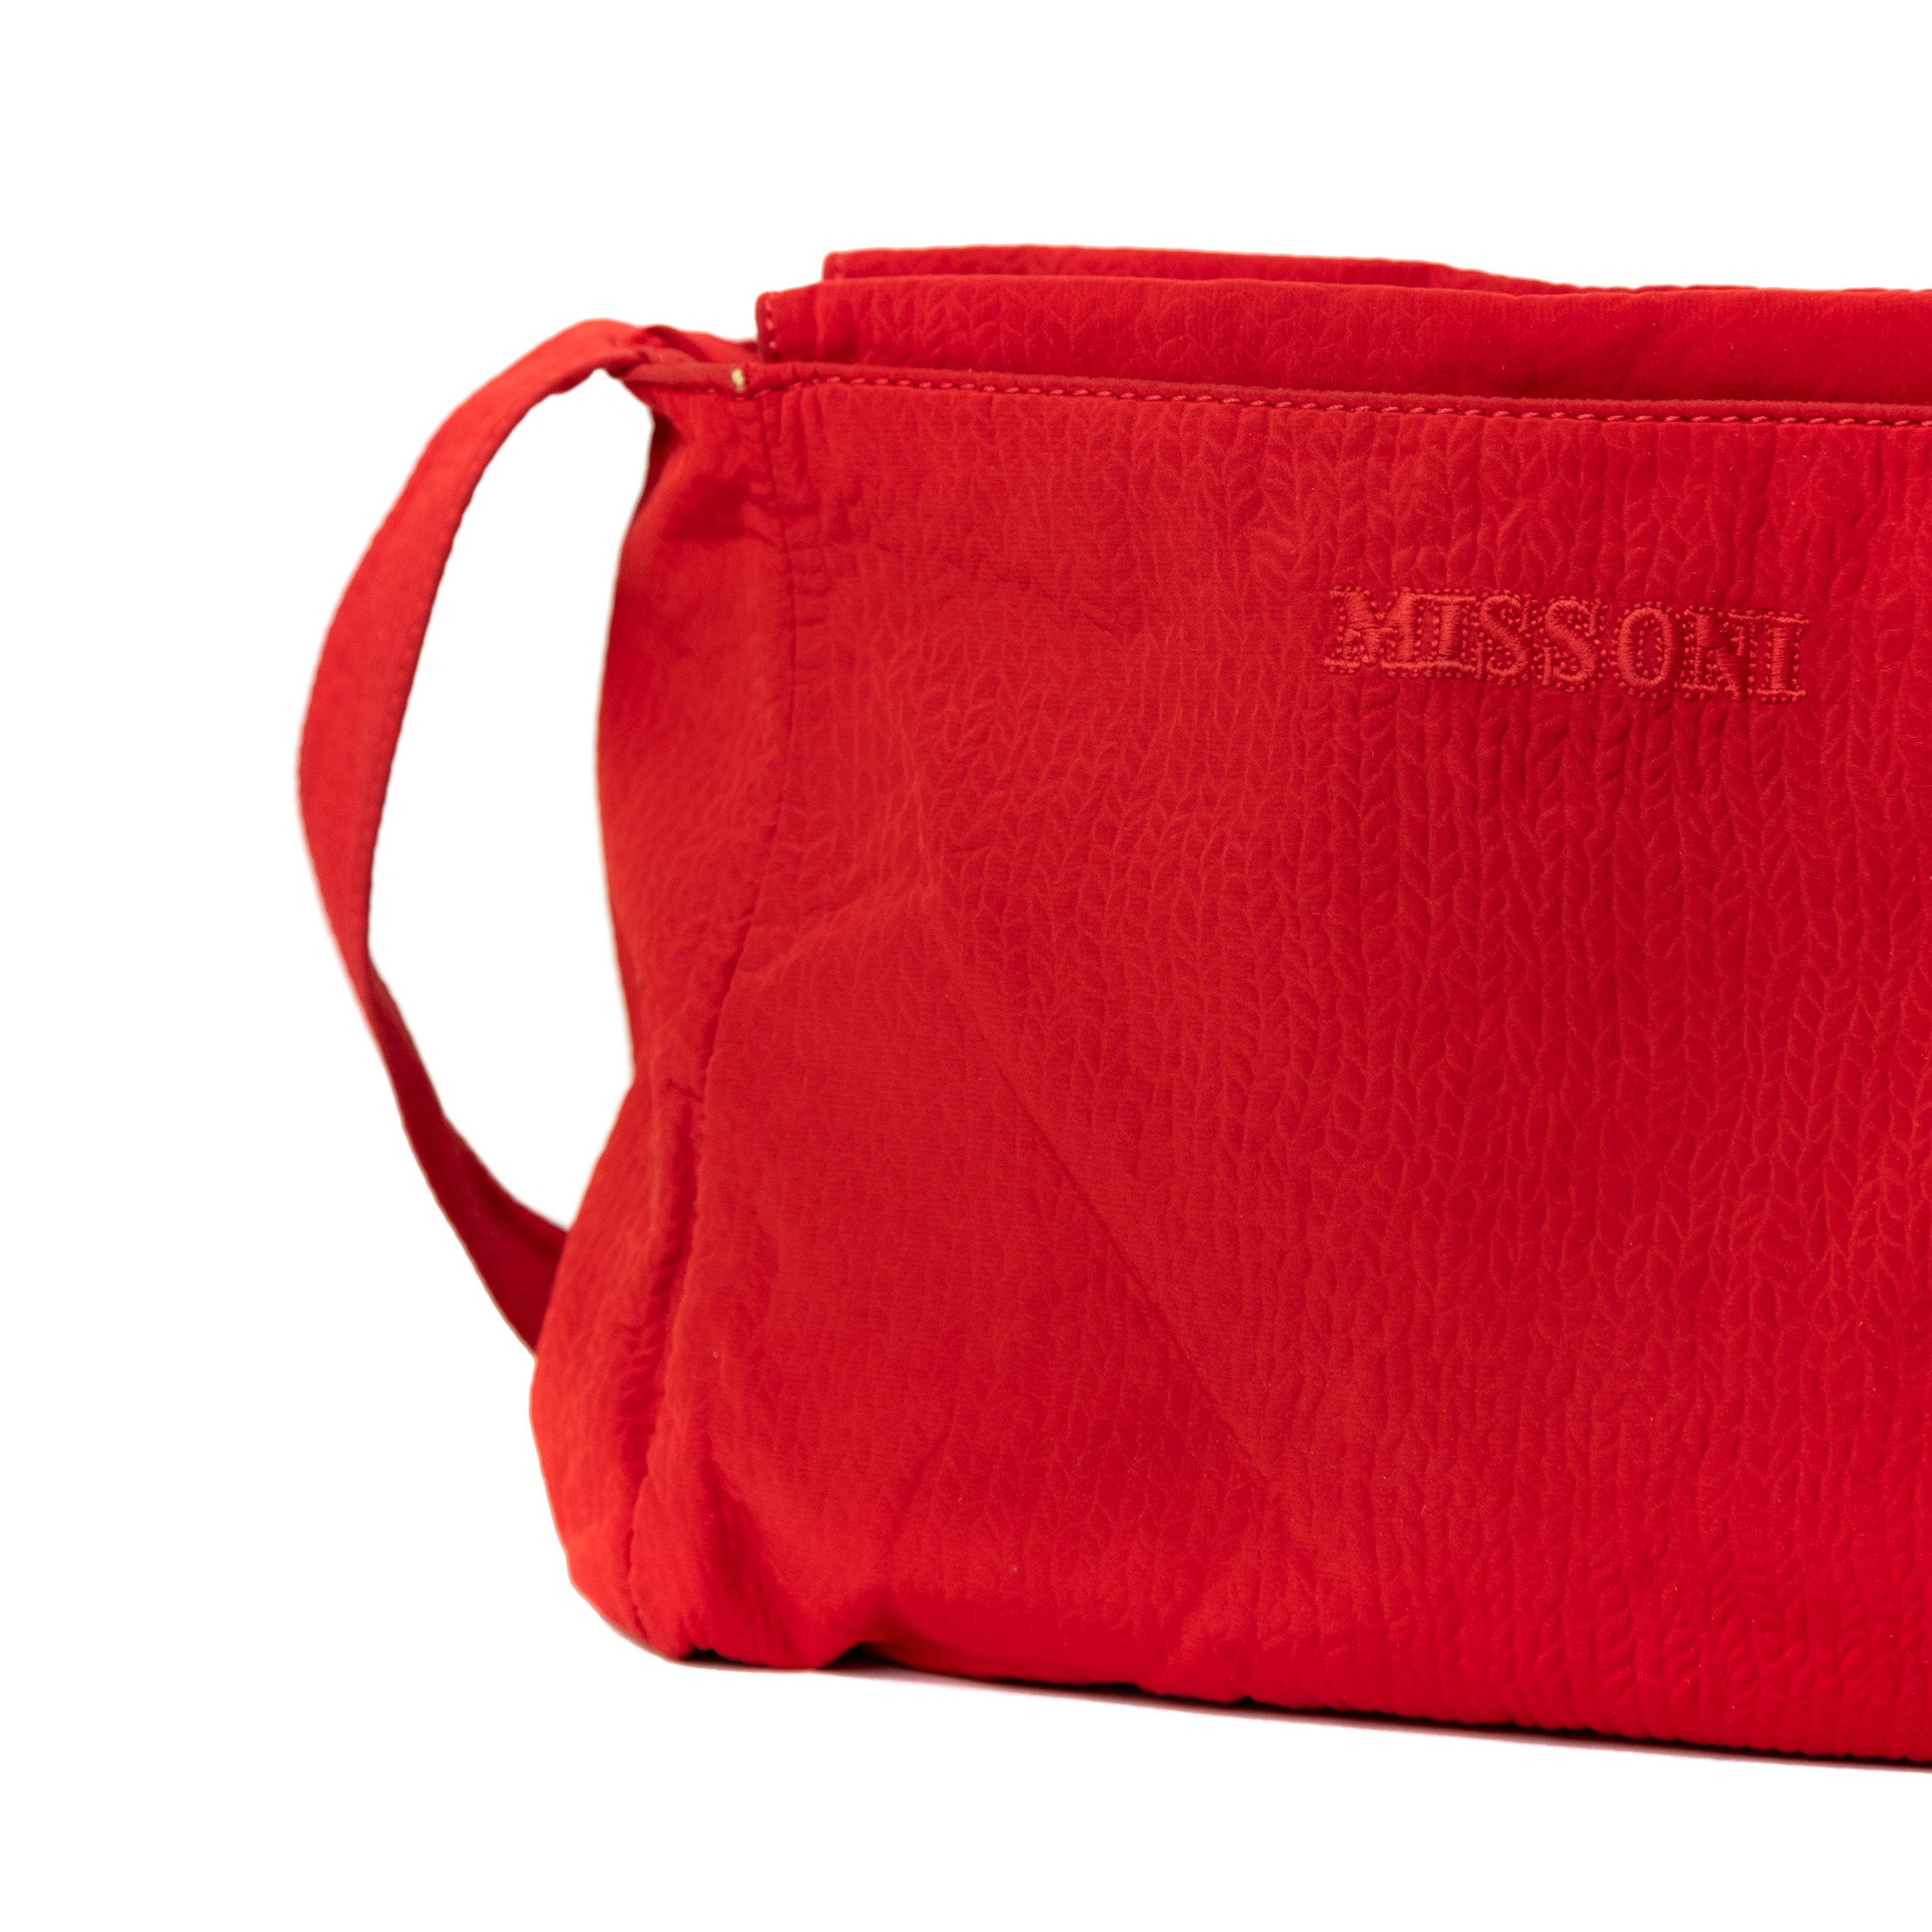 Alternate View 1 of Missoni Red Soft Cross Body Bag